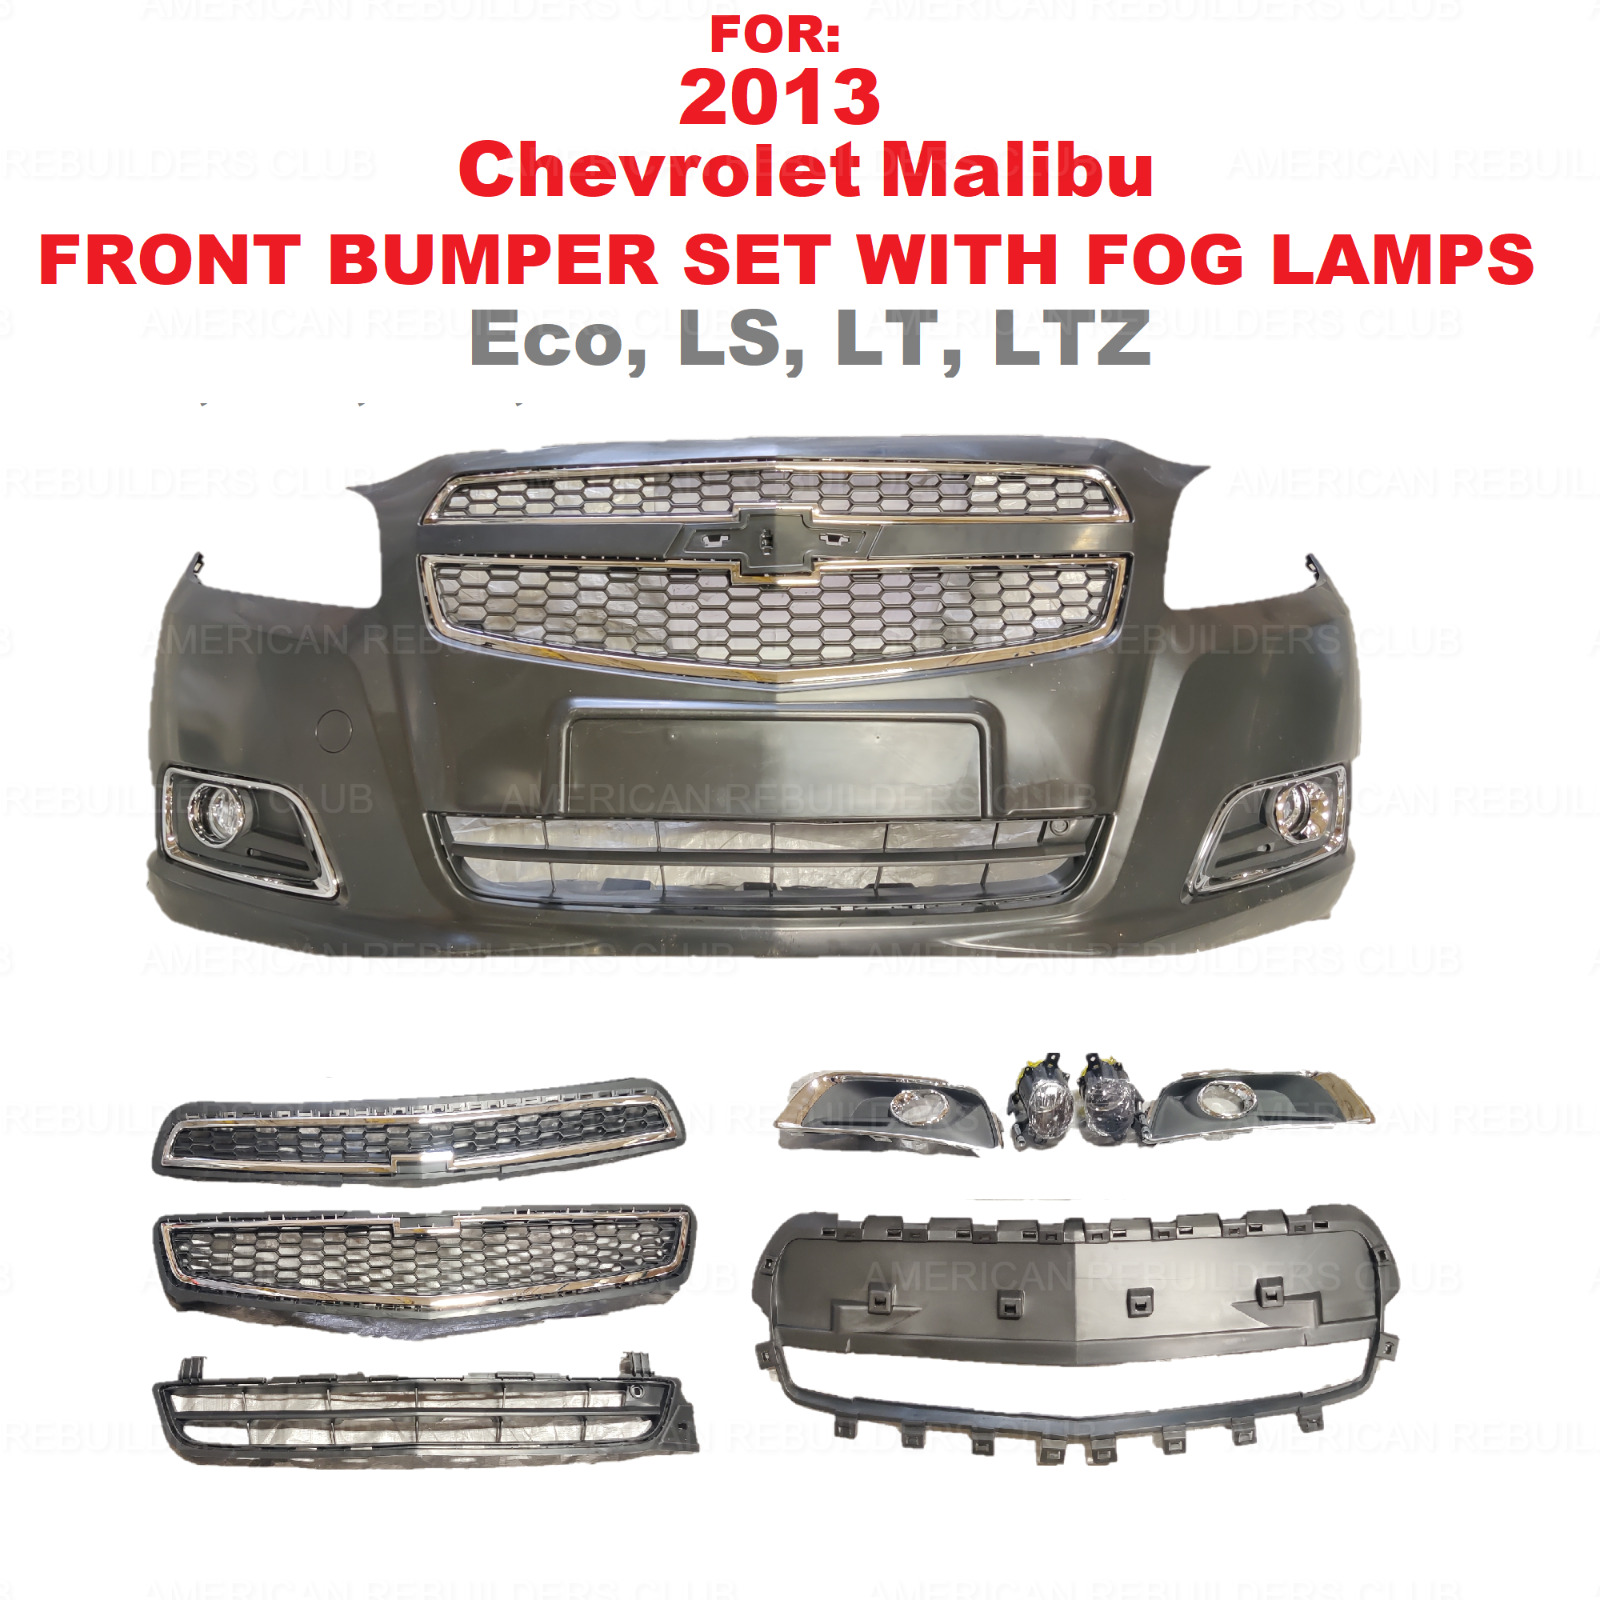 FITS 2013 CHEVROLET MALIBU FRONT BUMPER COVER SET COMPLETE WITH FOG LIGHTS